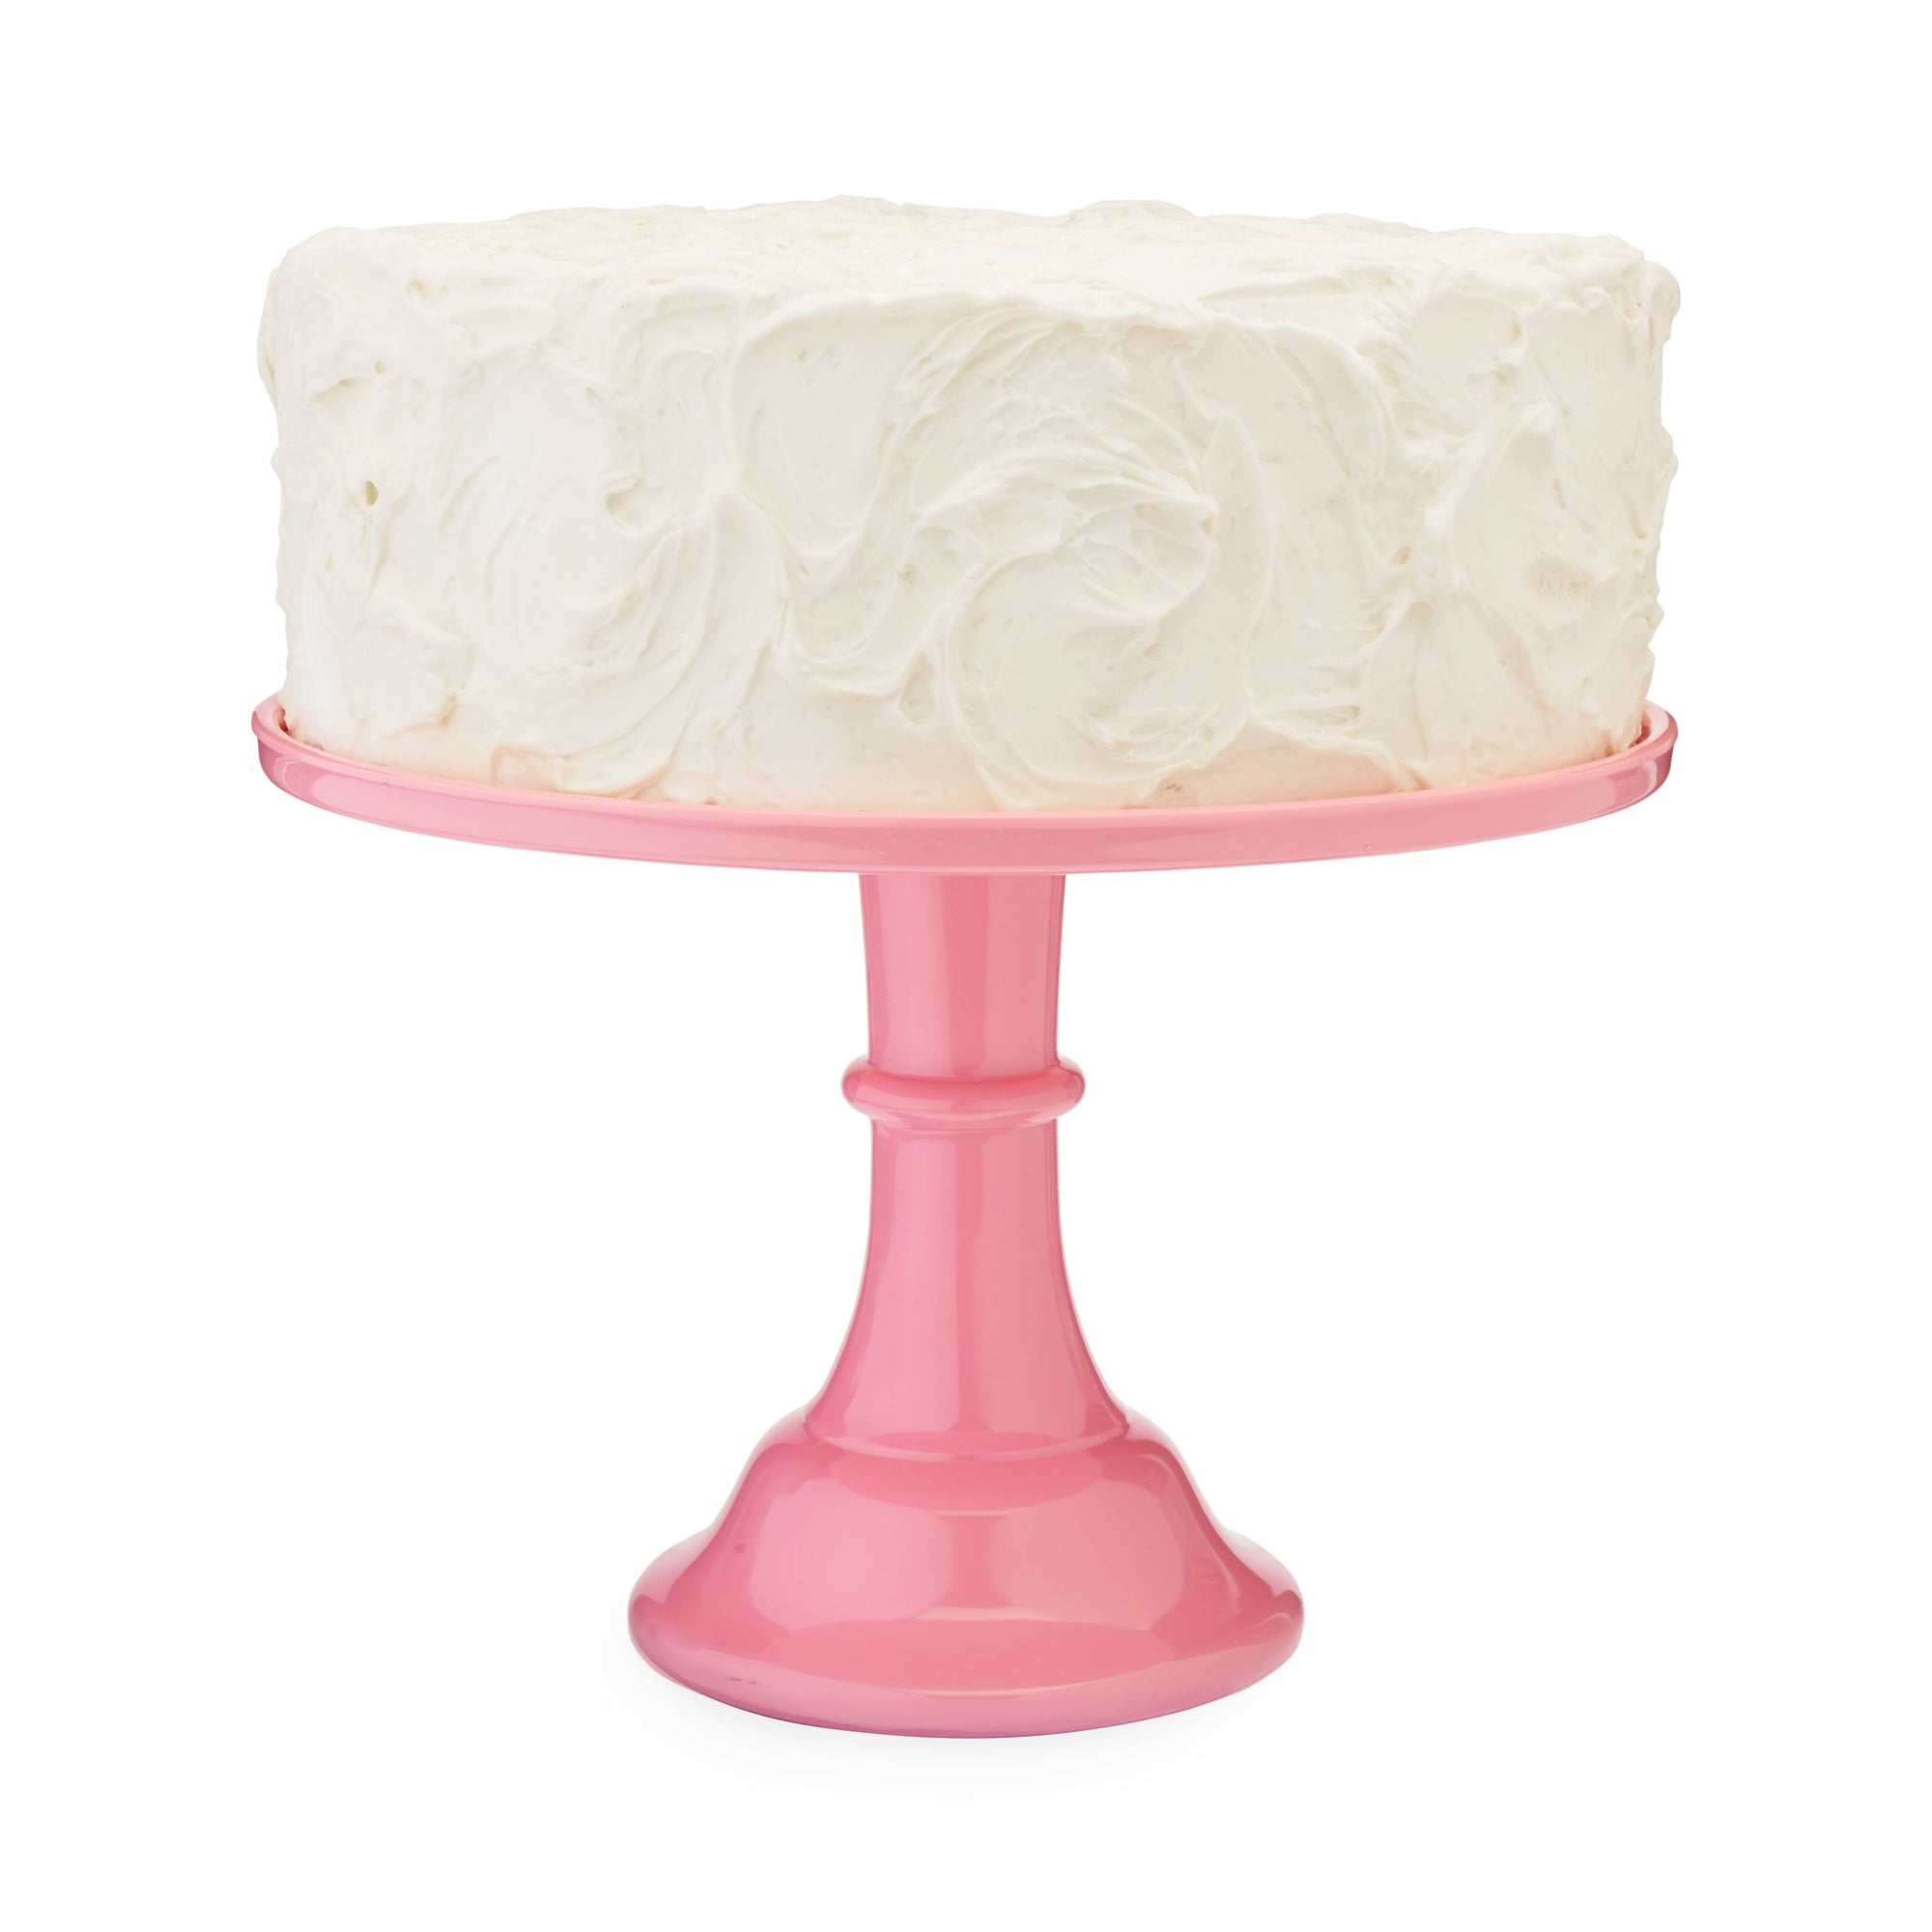 Deep Pink Melamine Cake Stand